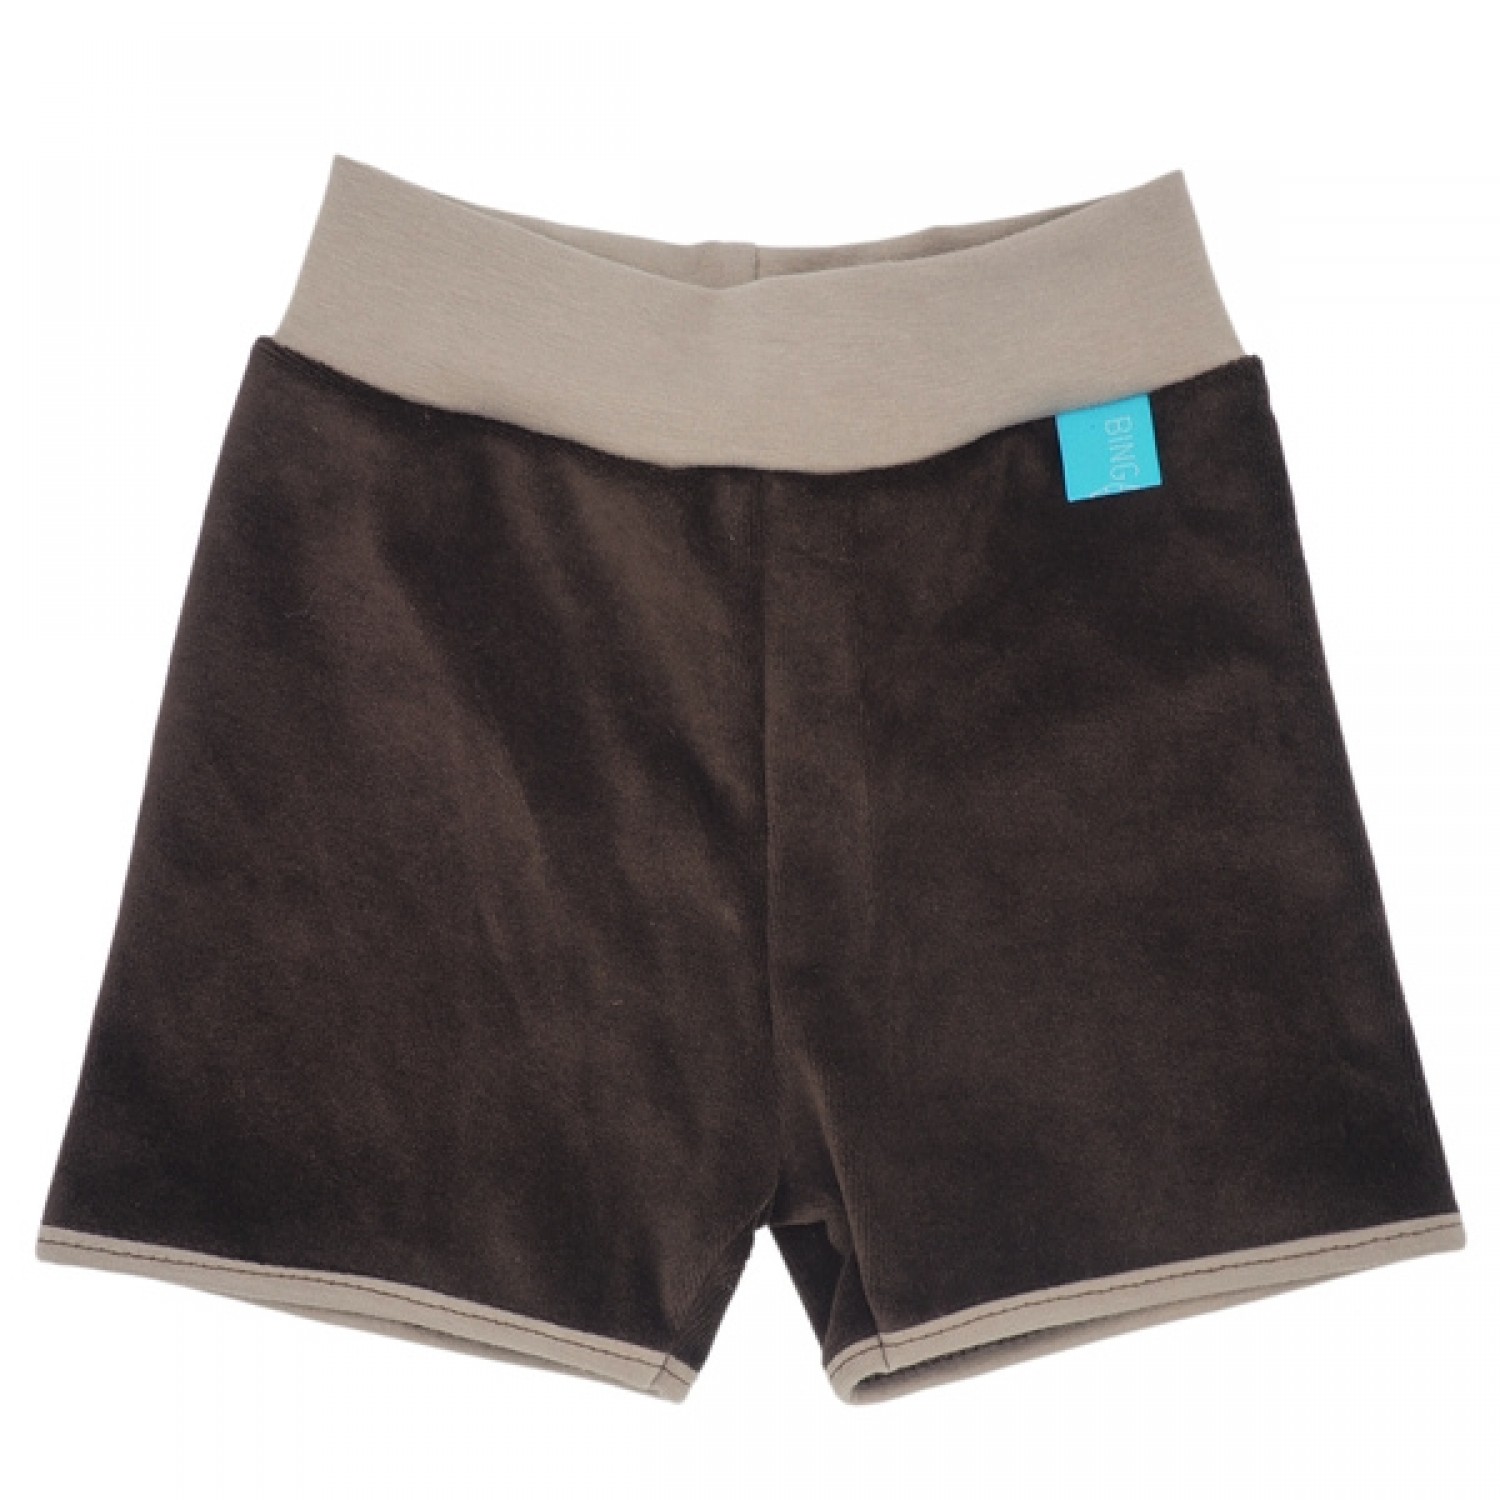 Pull-on shorts eco plush cotton brown/taupe » bingabonga